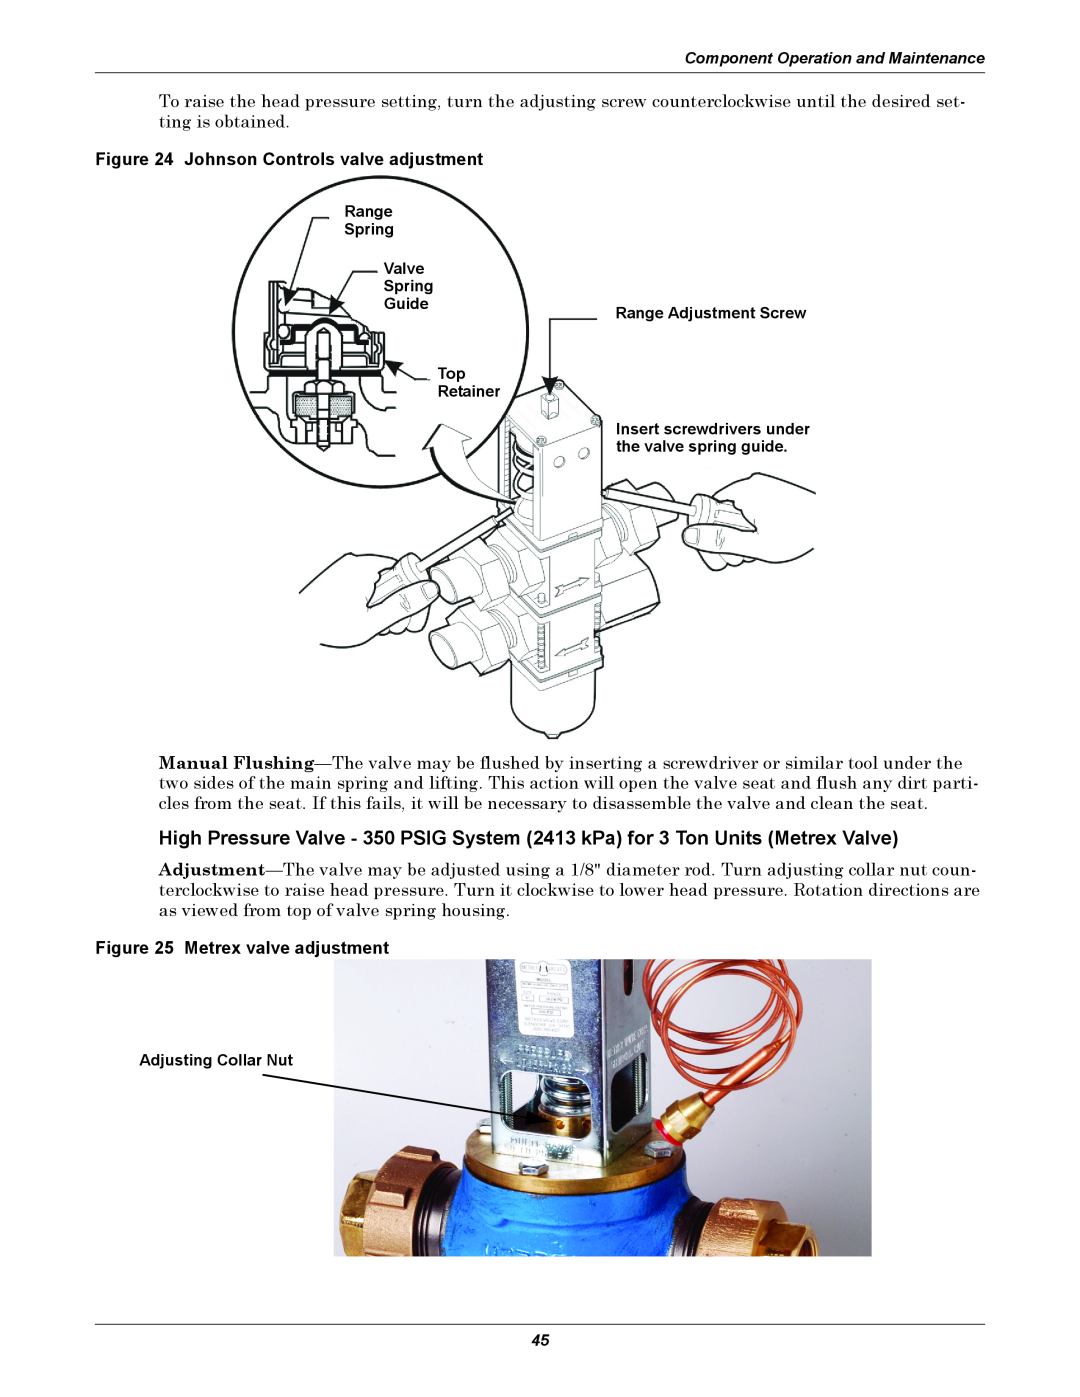 Emerson 3000/ITR manual Johnson Controls valve adjustment, Metrex valve adjustment, Component Operation and Maintenance 